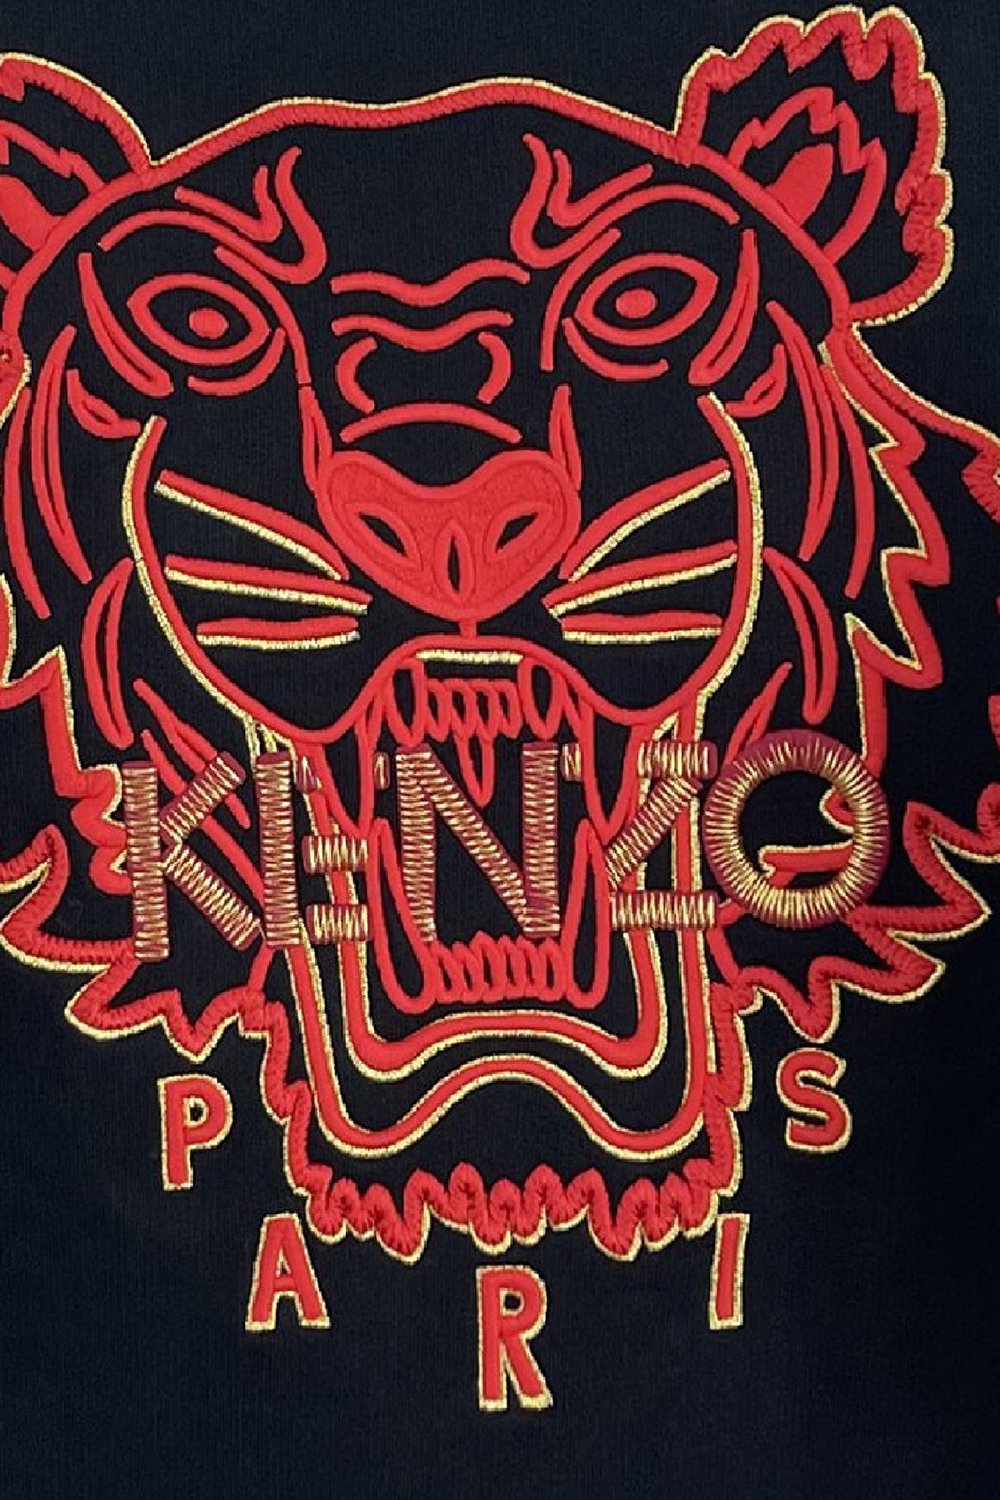 Men's Kenzo Black CNY Original Red Tiger Sweatshirt